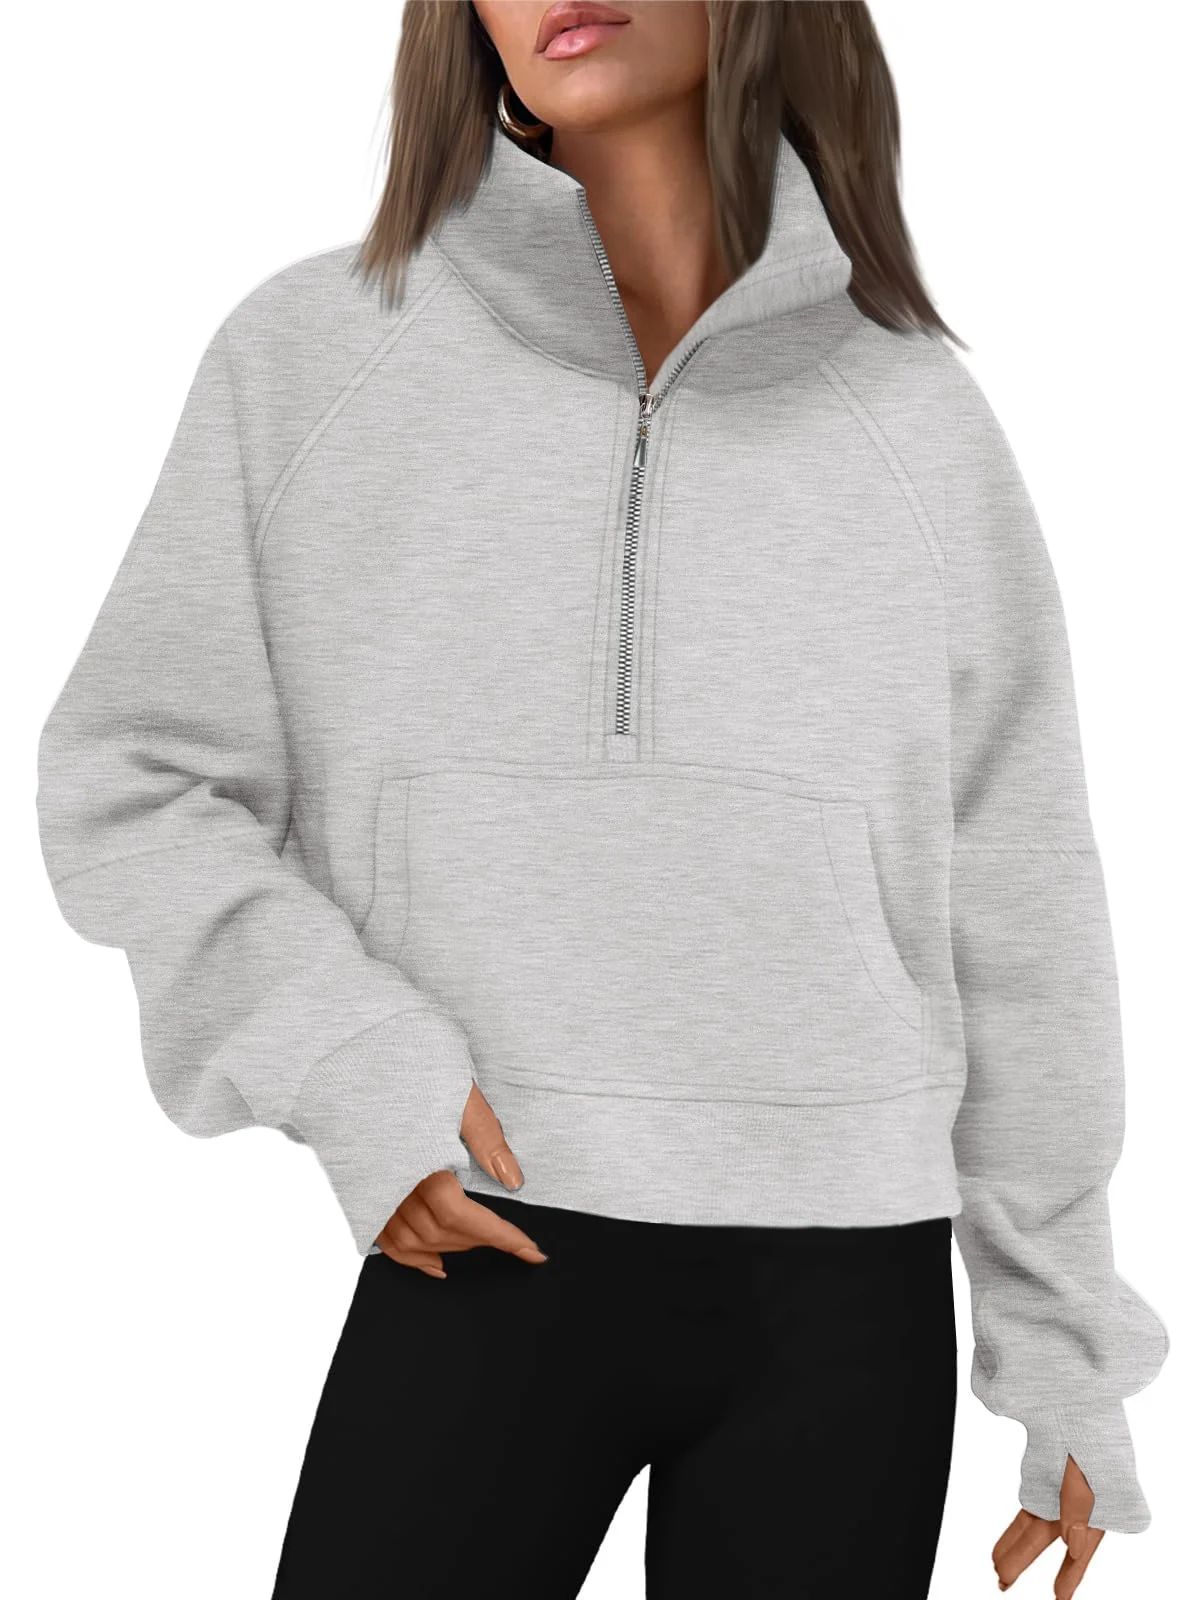 Rosvigor Sweatshirt for Women Half Zip Cropped Pullover Fleece Hoodies Fall Tops Thumb Hole - Wal... | Walmart (US)